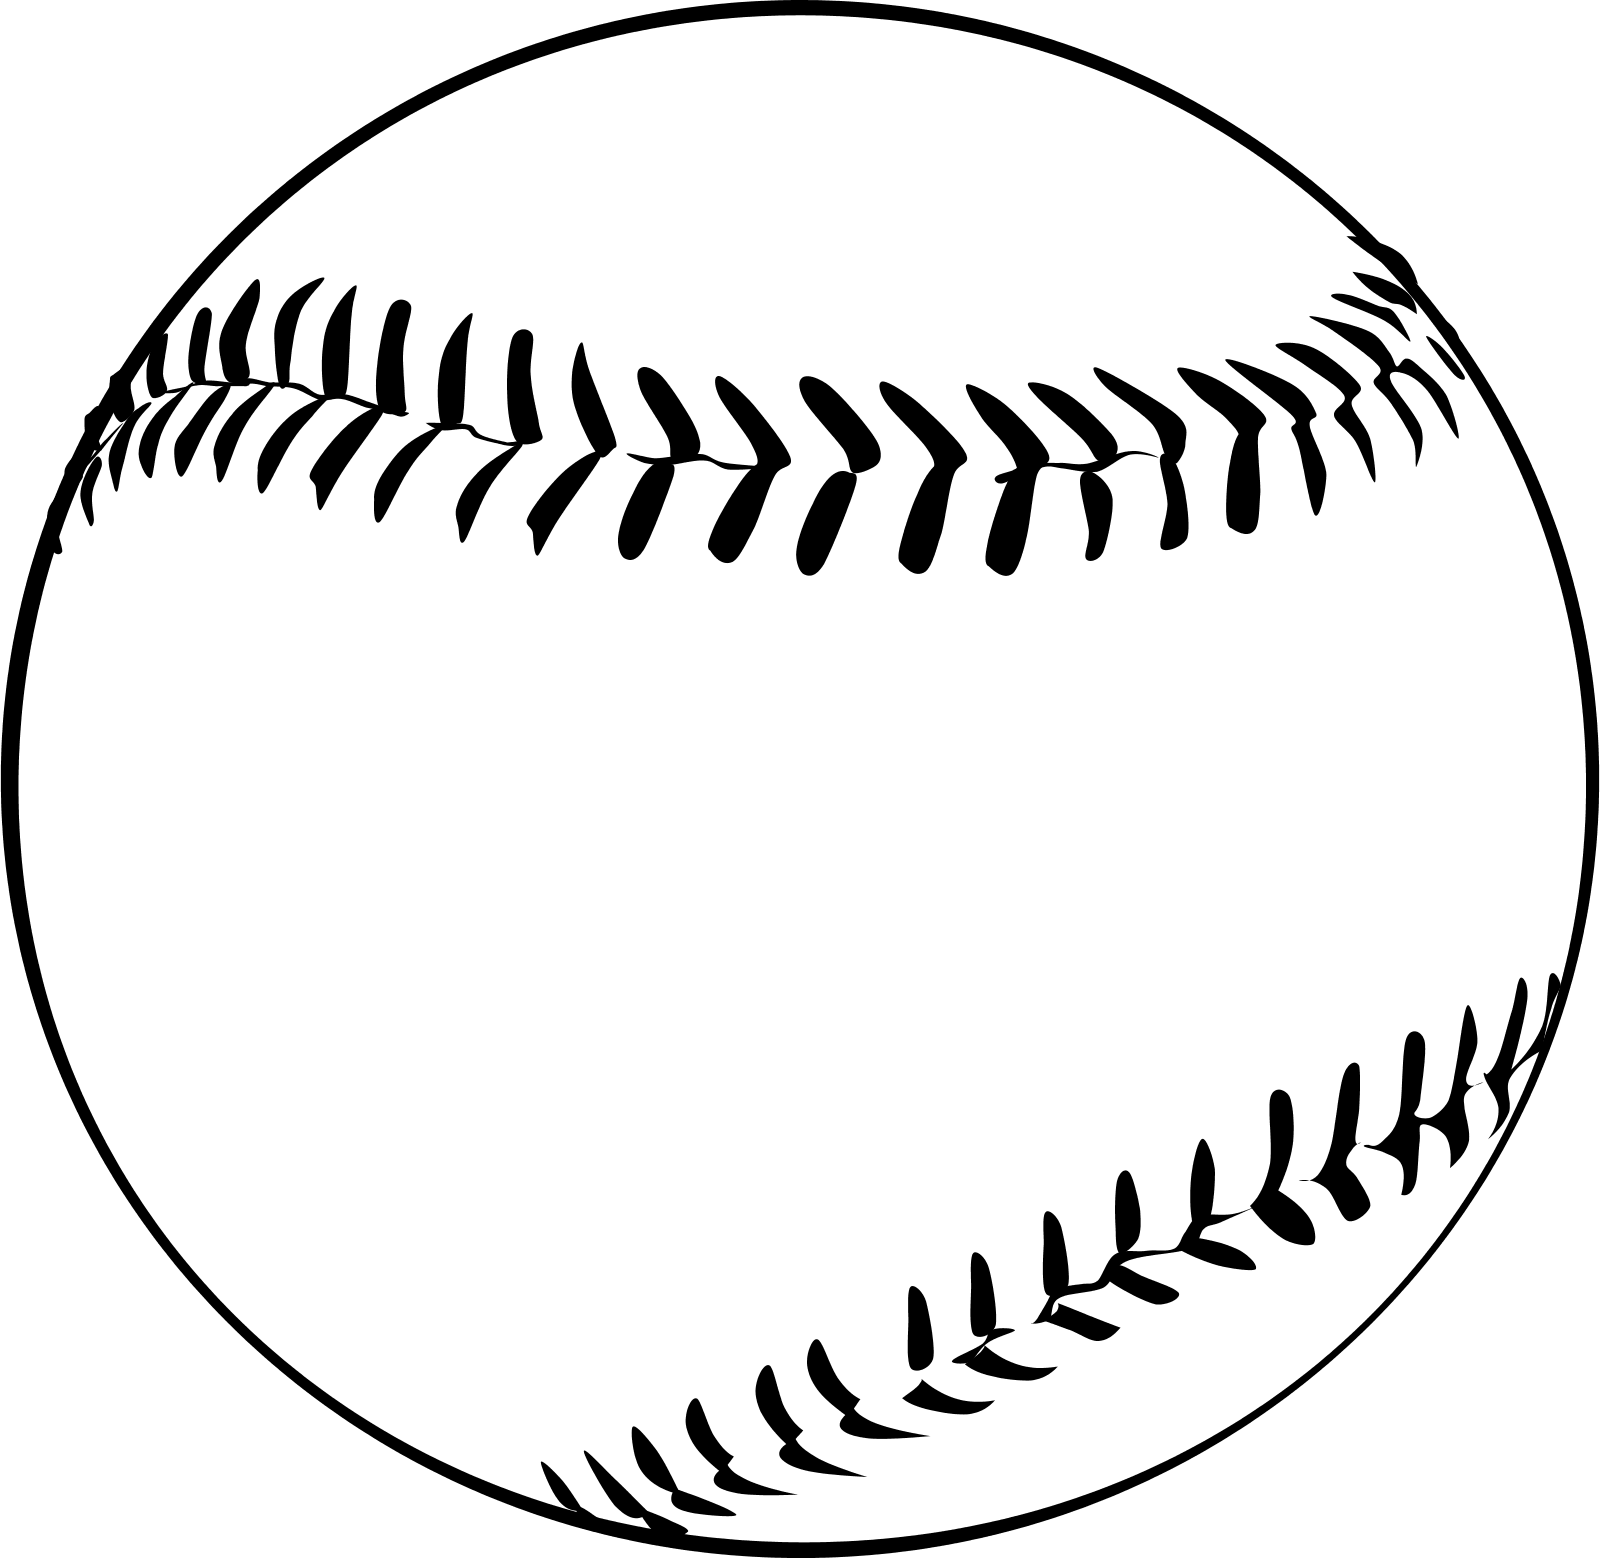 Baseball Stitches Graphic PNG image